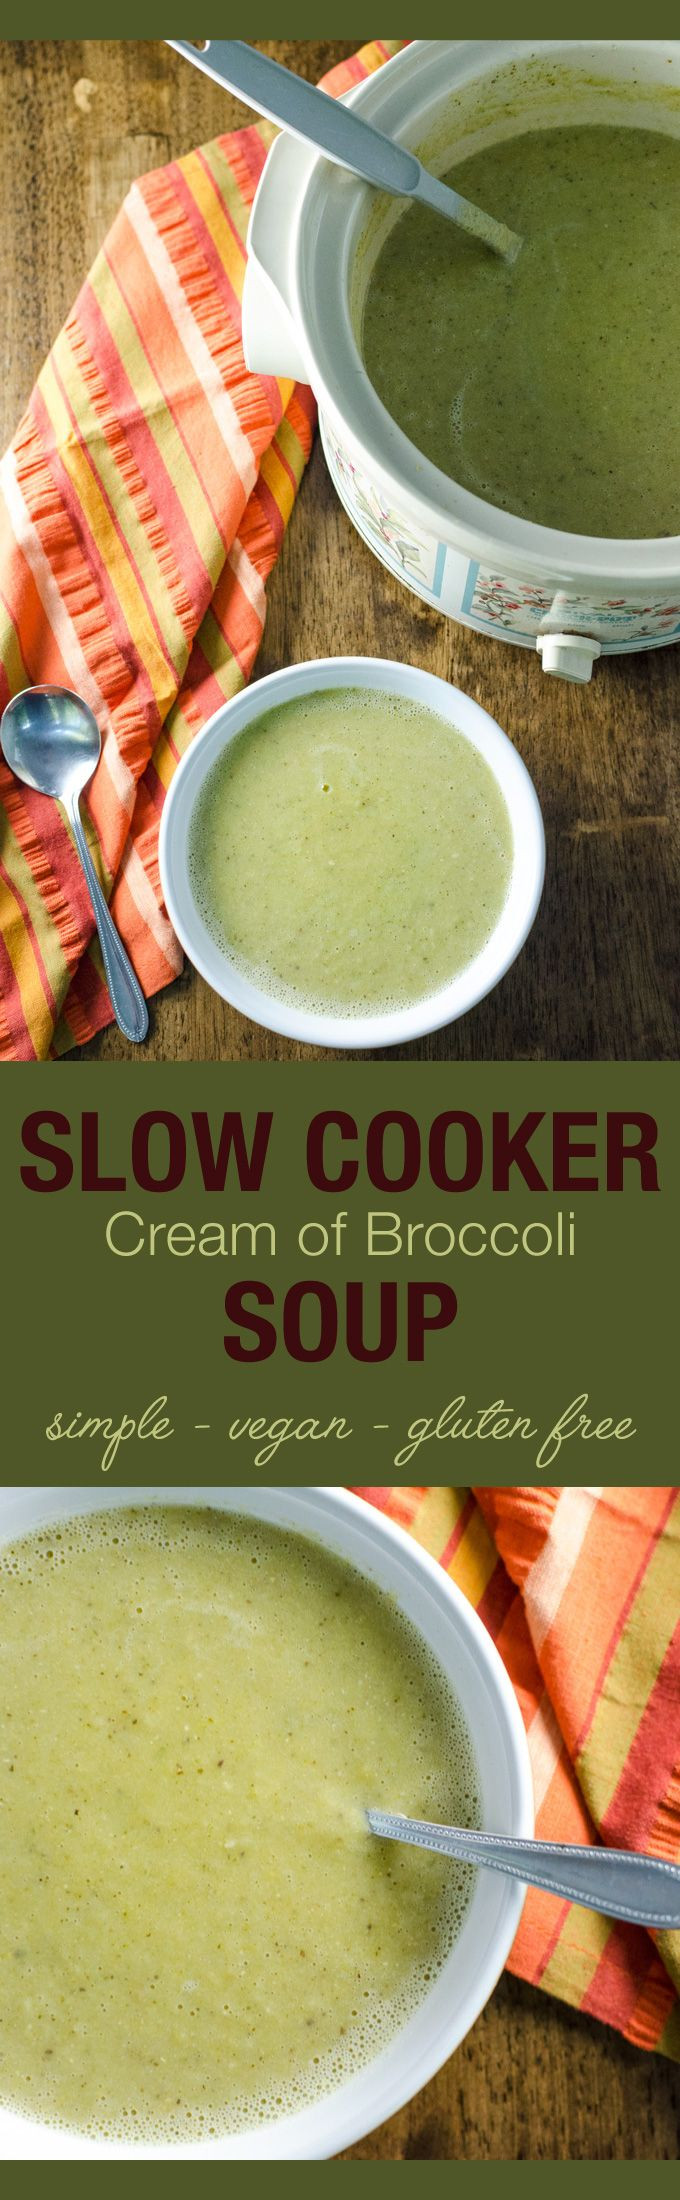 Vegan Gluten Free Crockpot Recipes
 Slow Cooker Cream of Broccoli Soup a simple vegan and